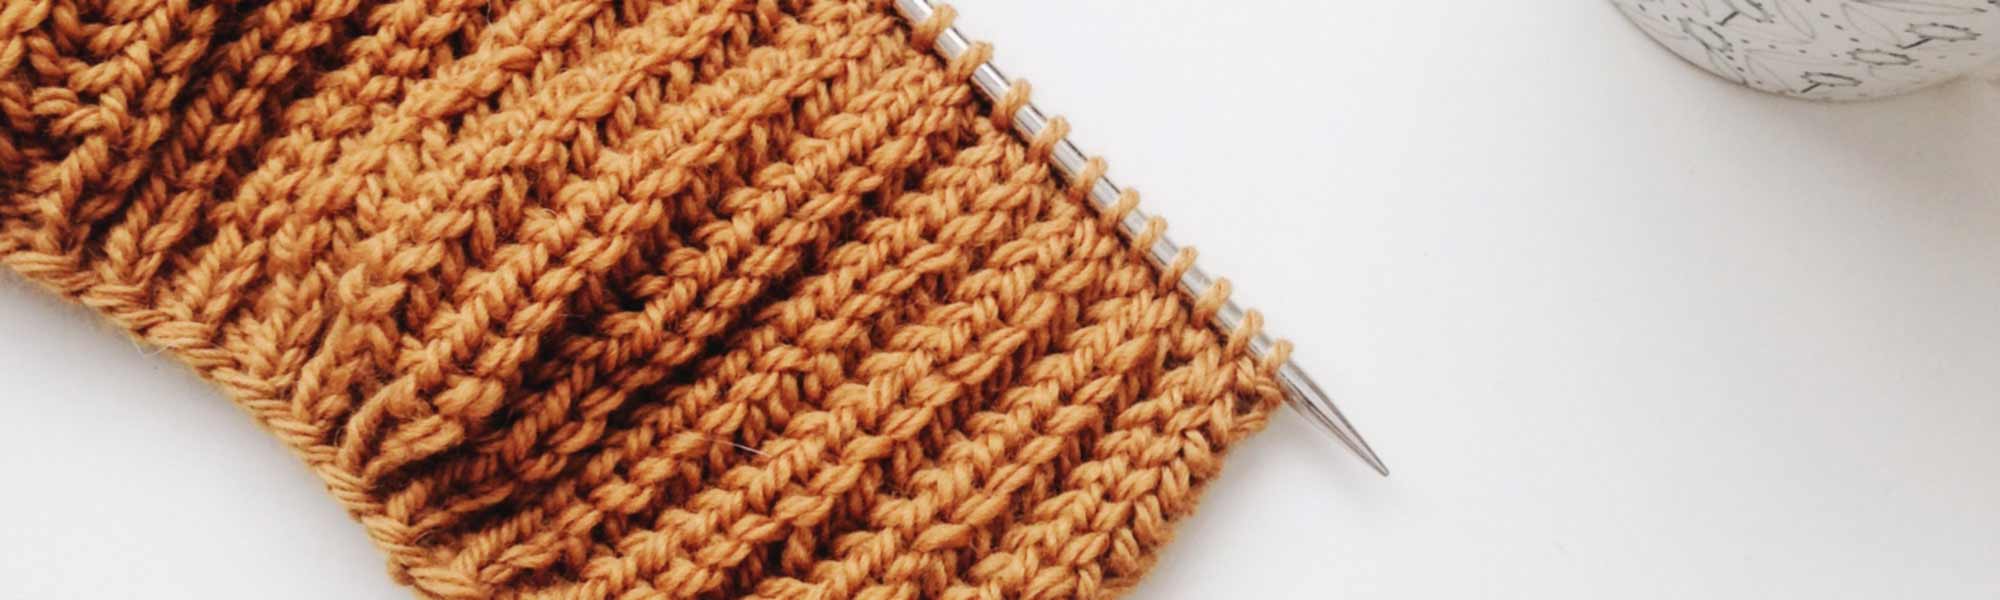 The Fastest Knitting Needles